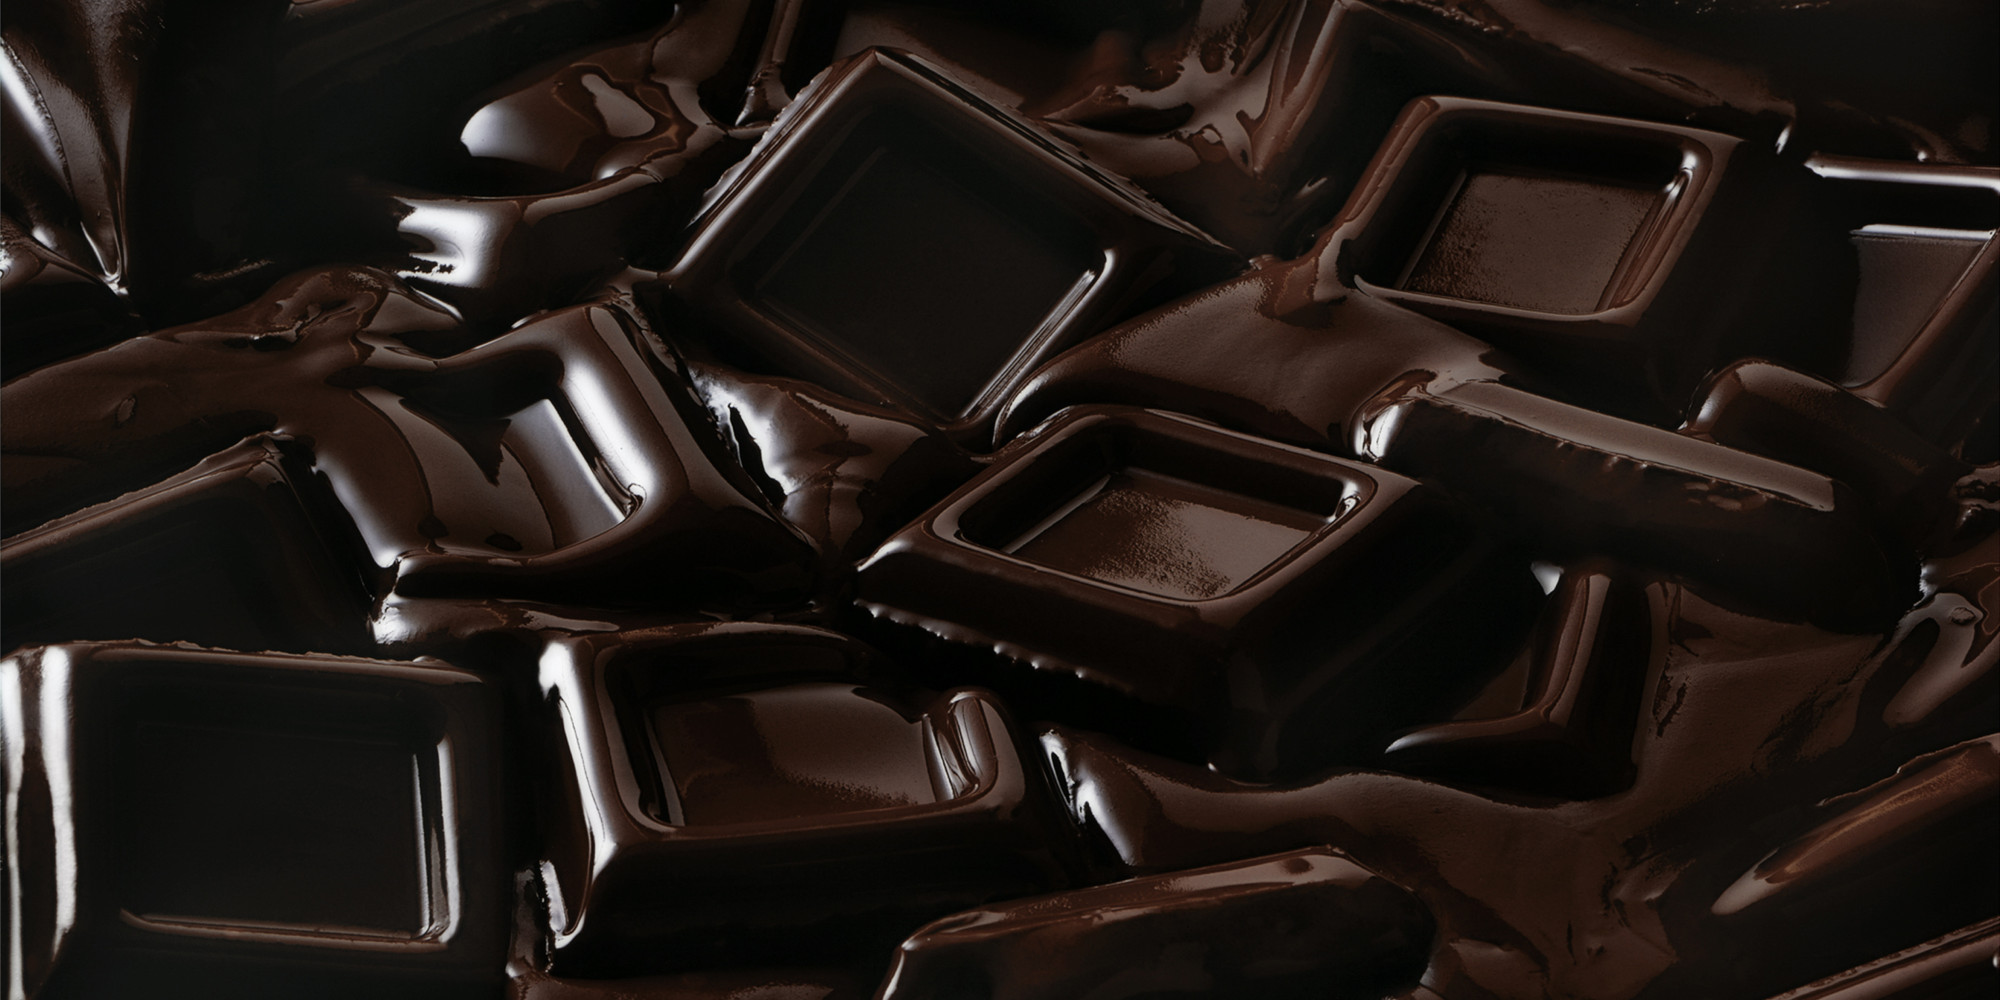 o DARK CHOCOLATE BENEFITS facebook